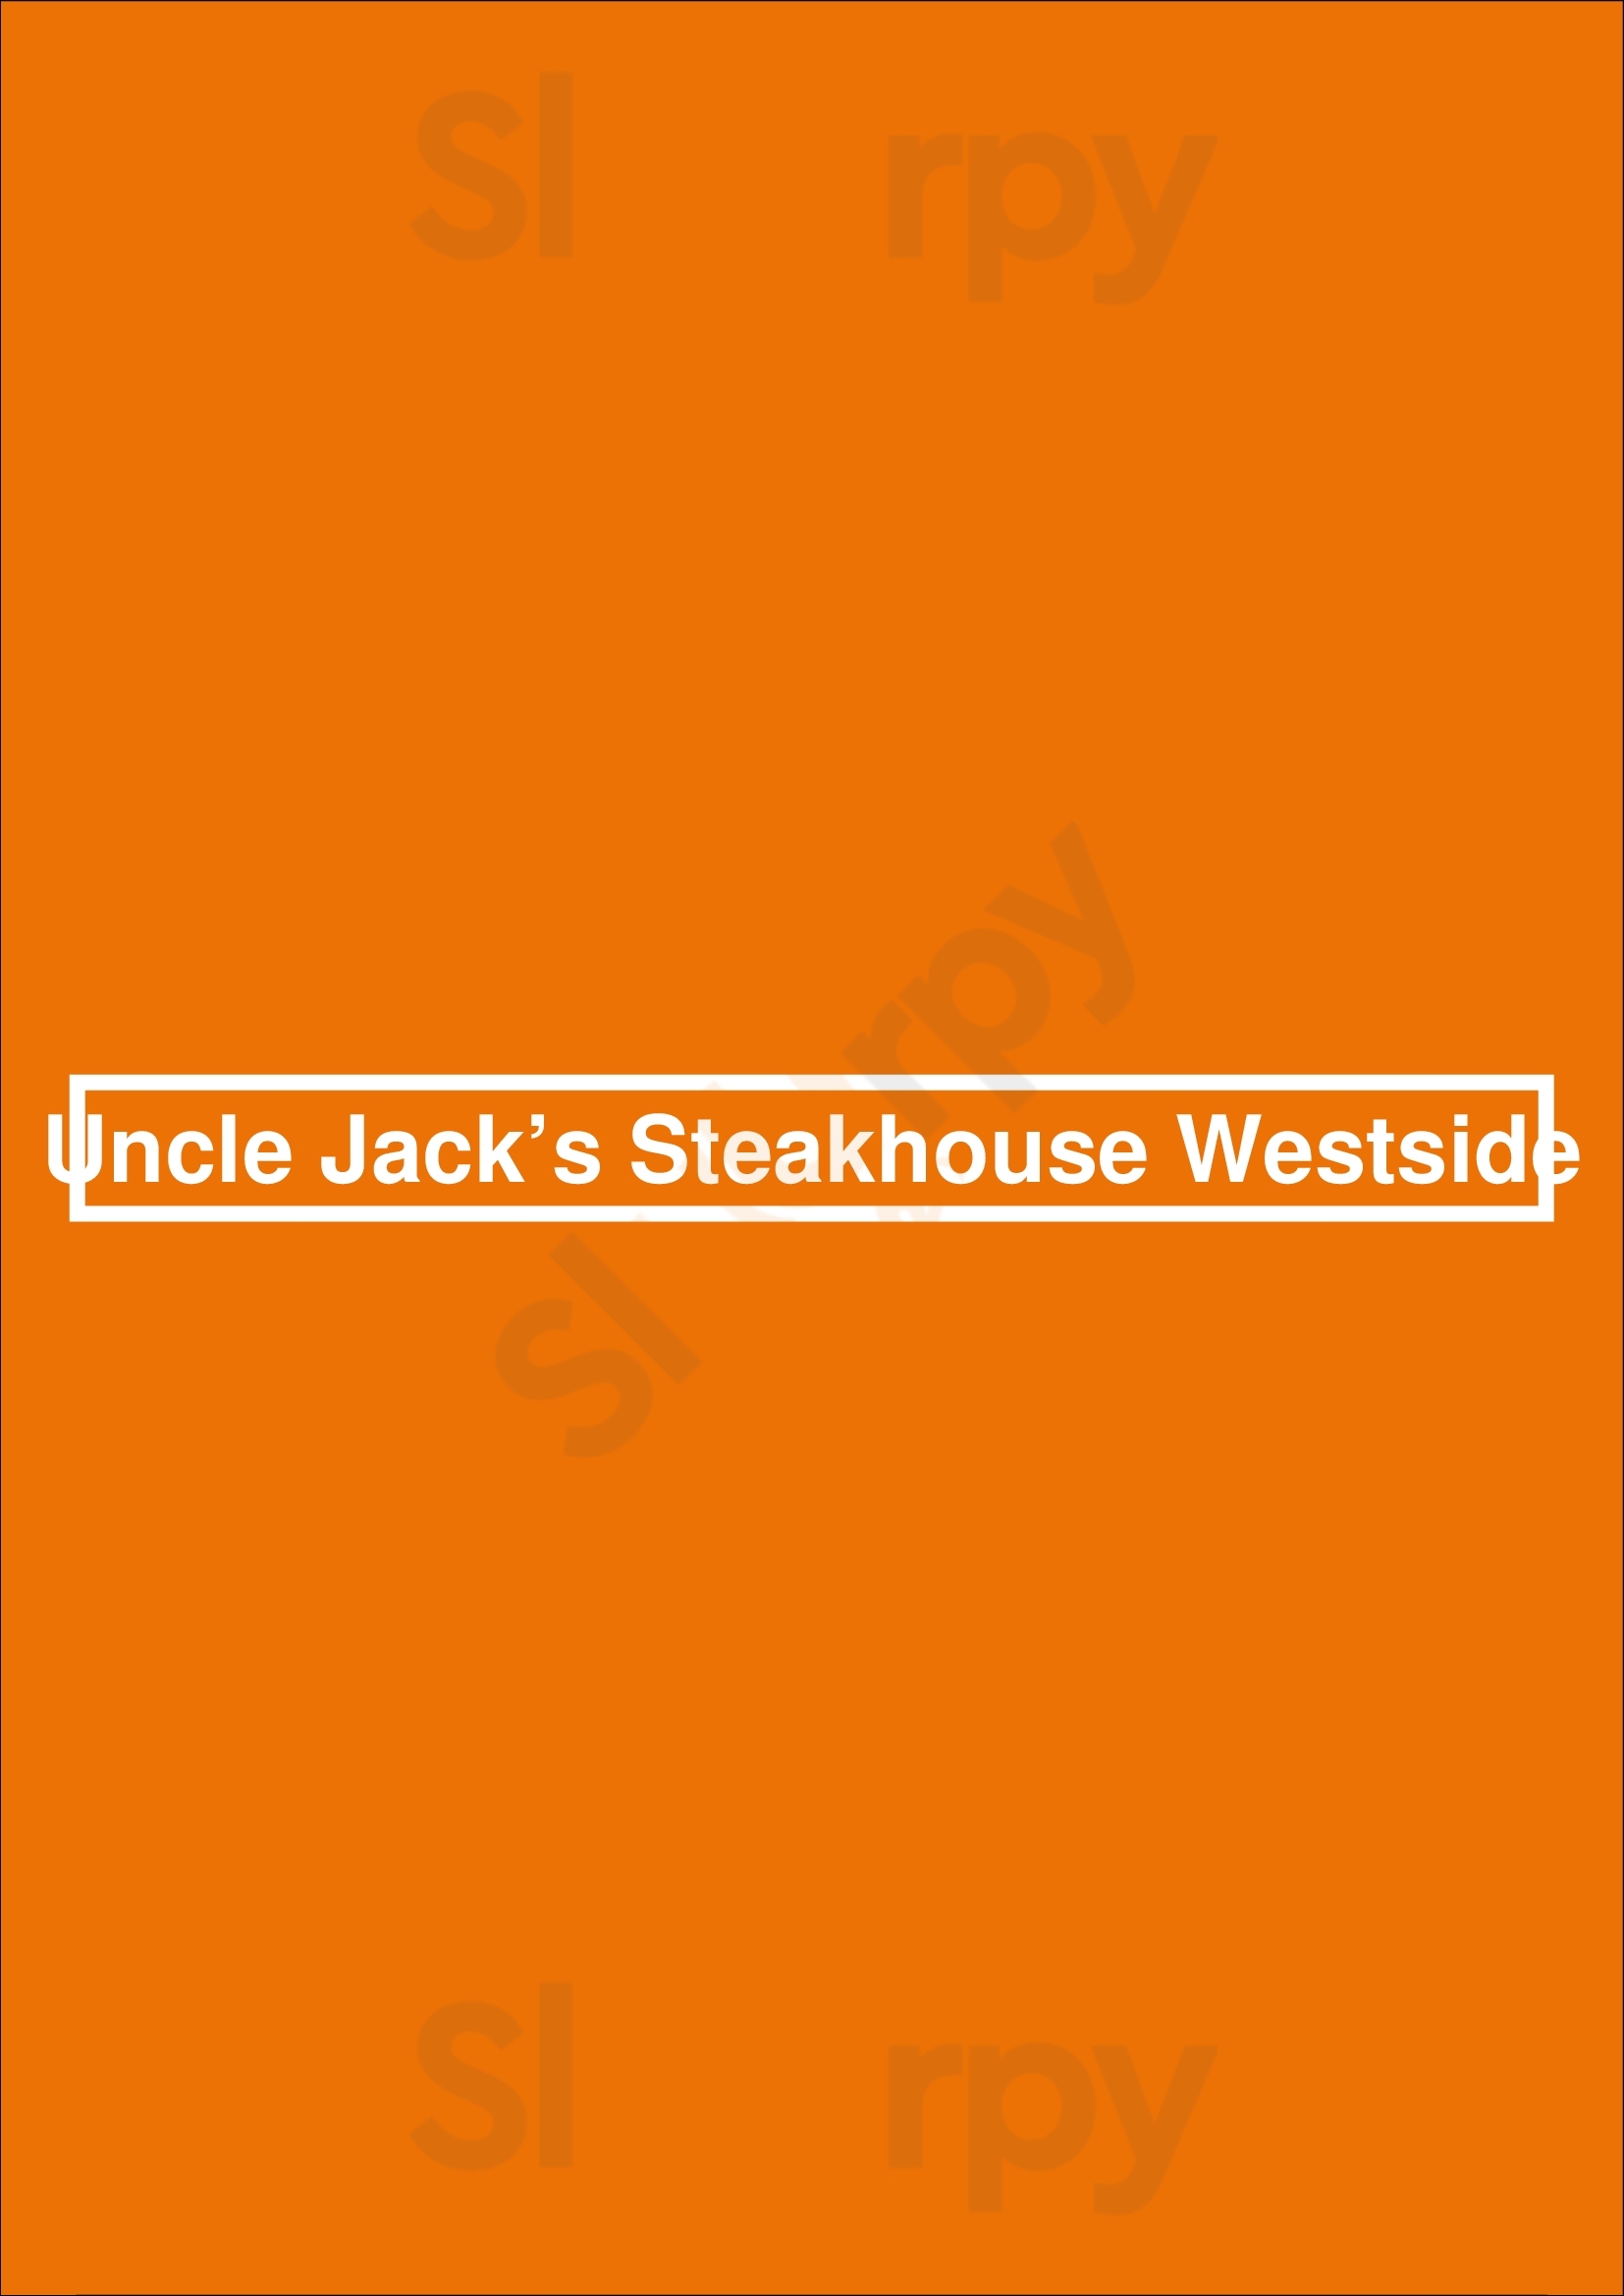 Uncle Jack’s Steakhouse Westside New York City Menu - 1